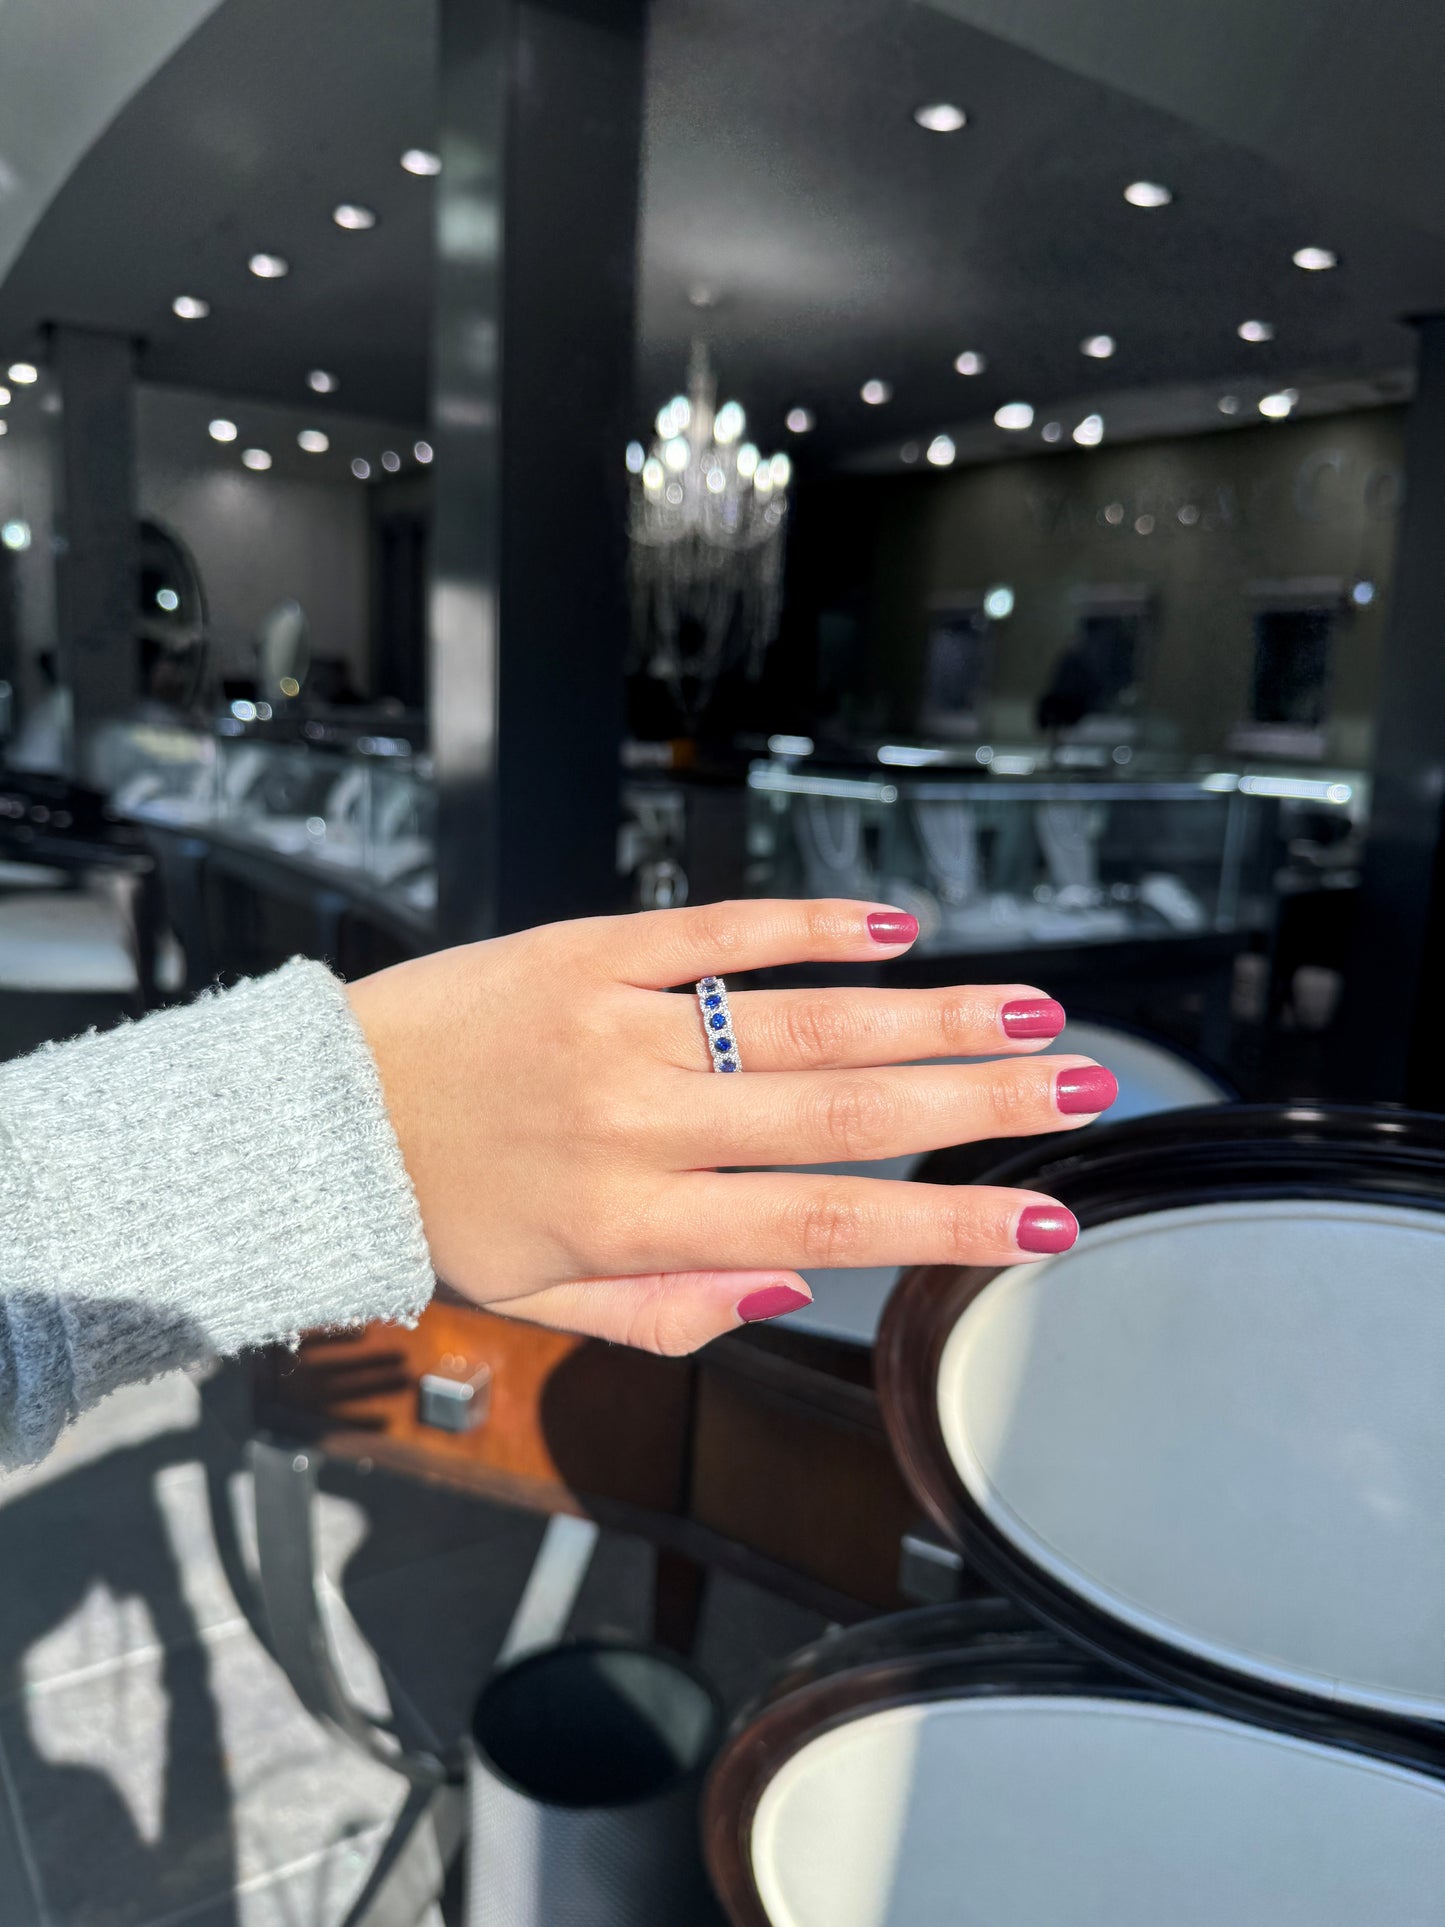 Diamond and Sapphire Fashion Ring